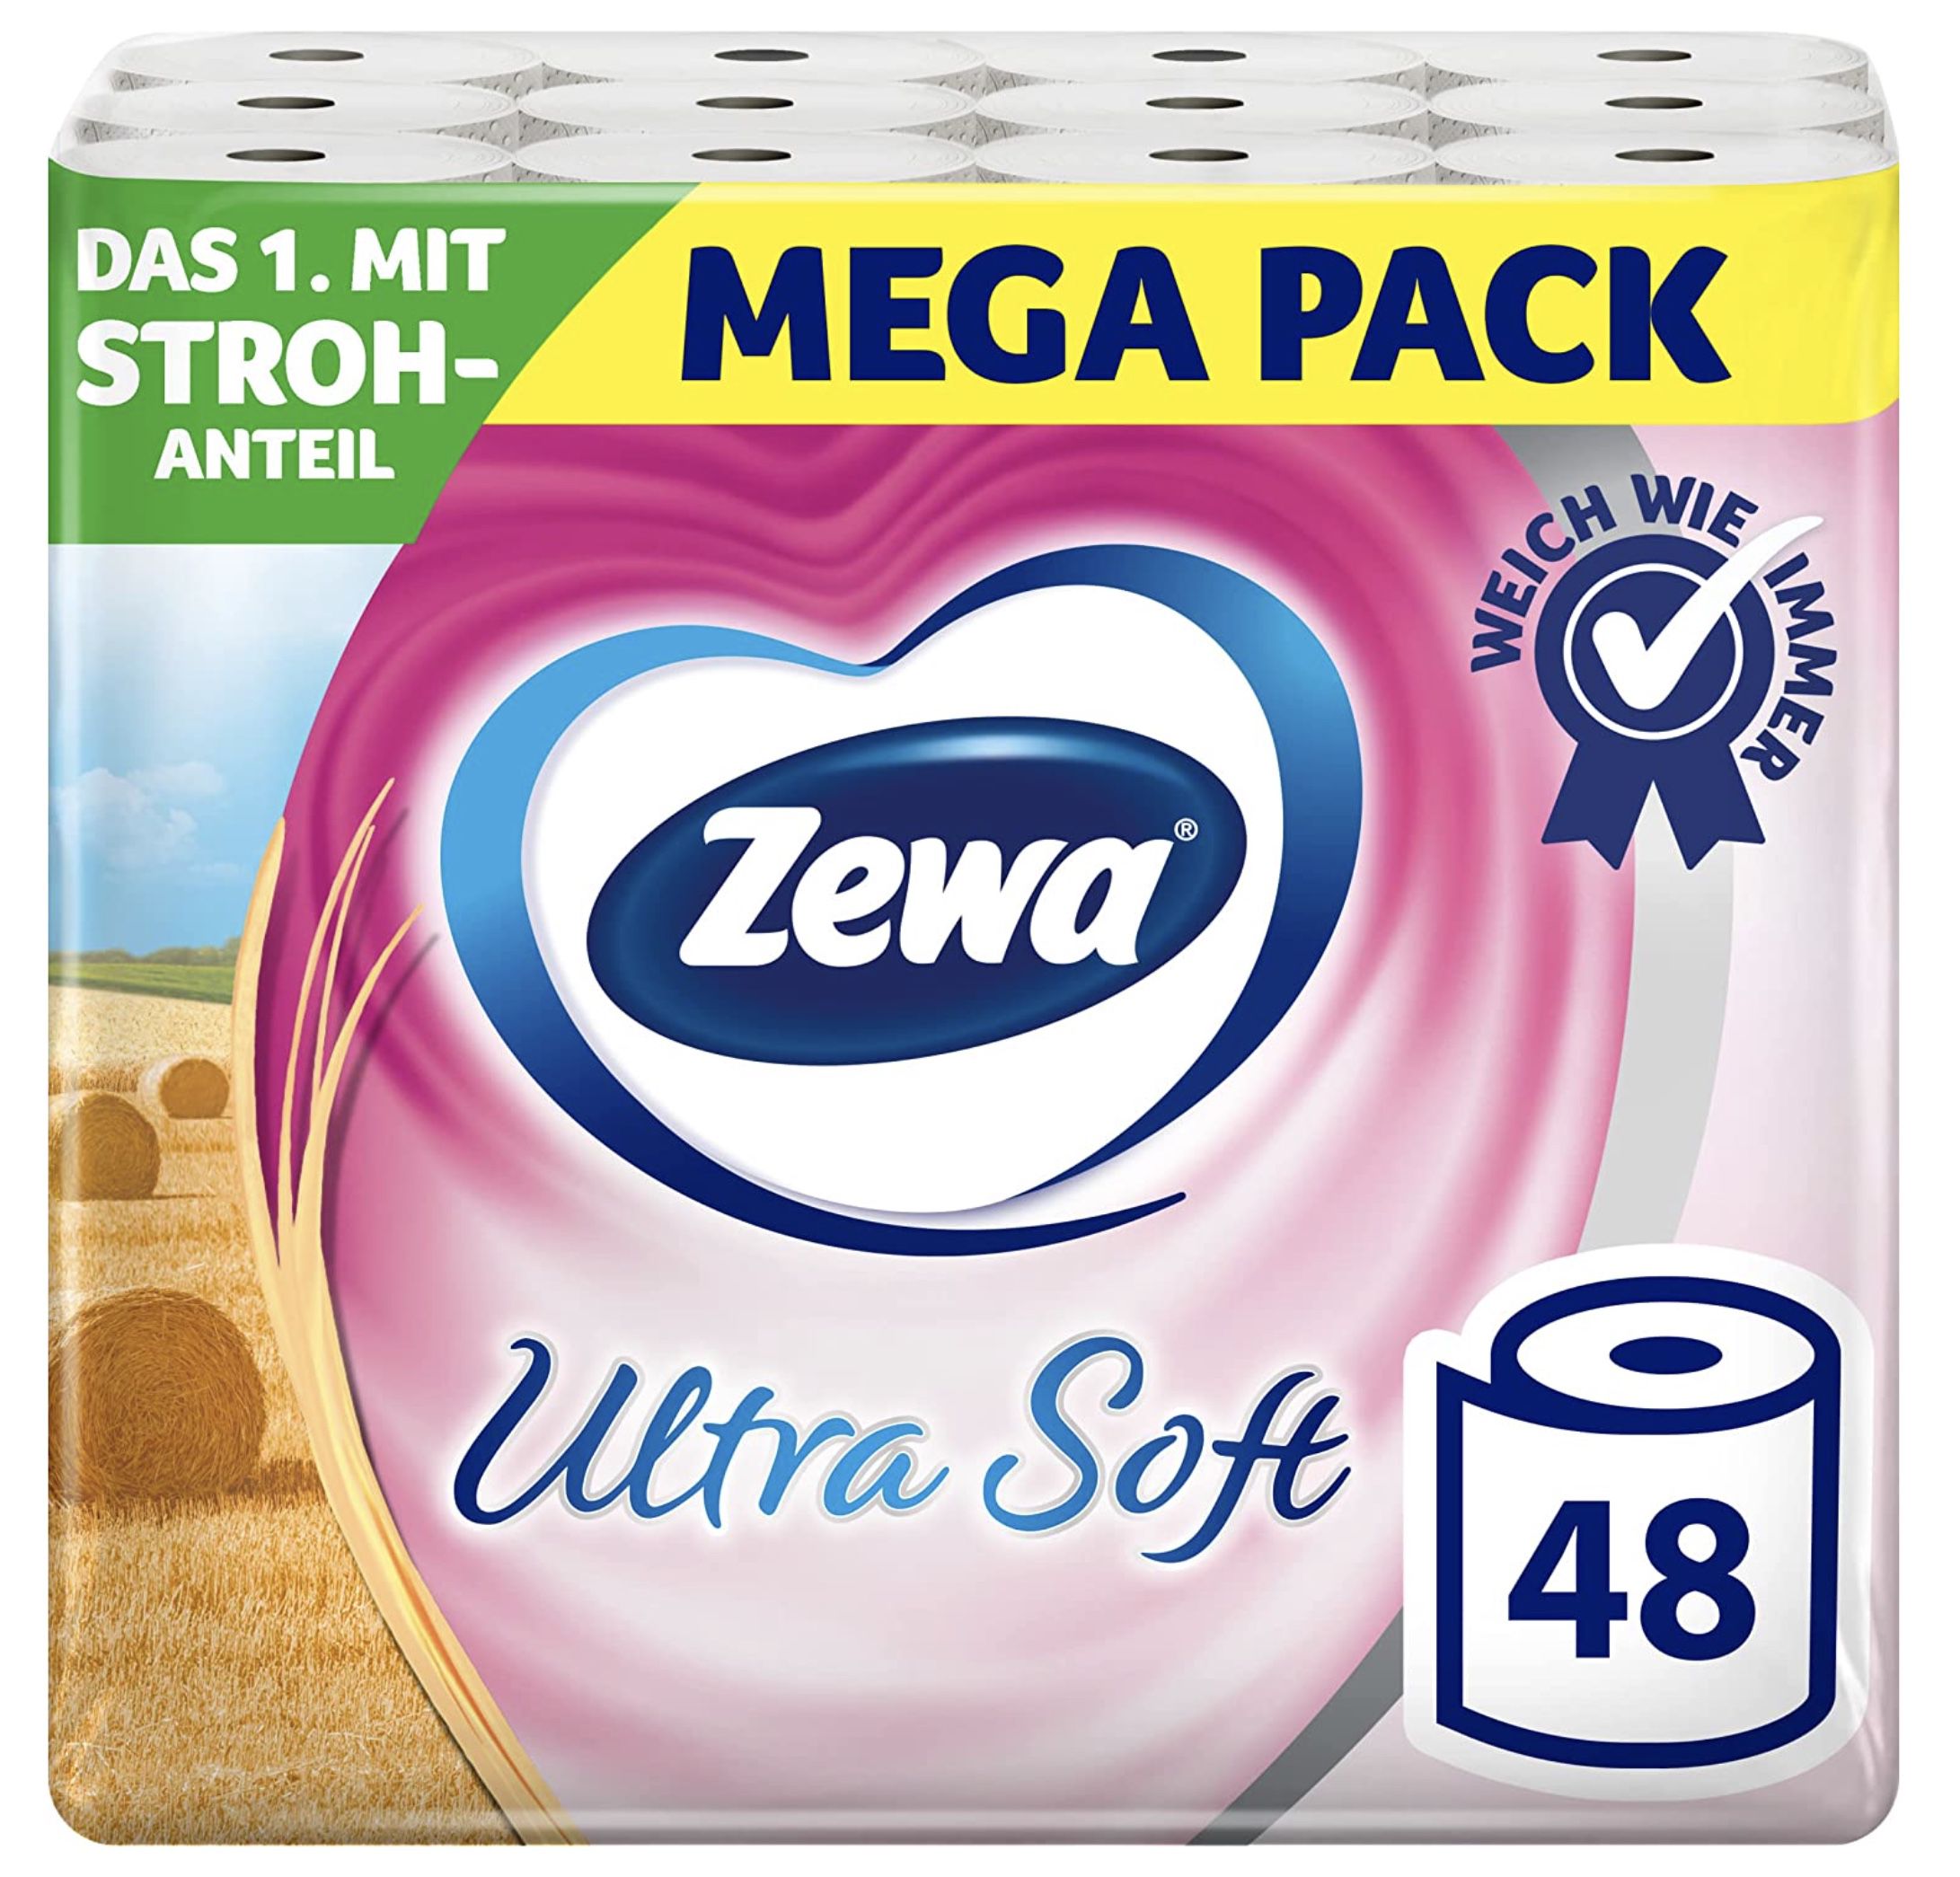 3x 16er Pack Zewa Ultra Soft Toilettenpapier mit Strohanteil ab 15,88€ (statt 27€)